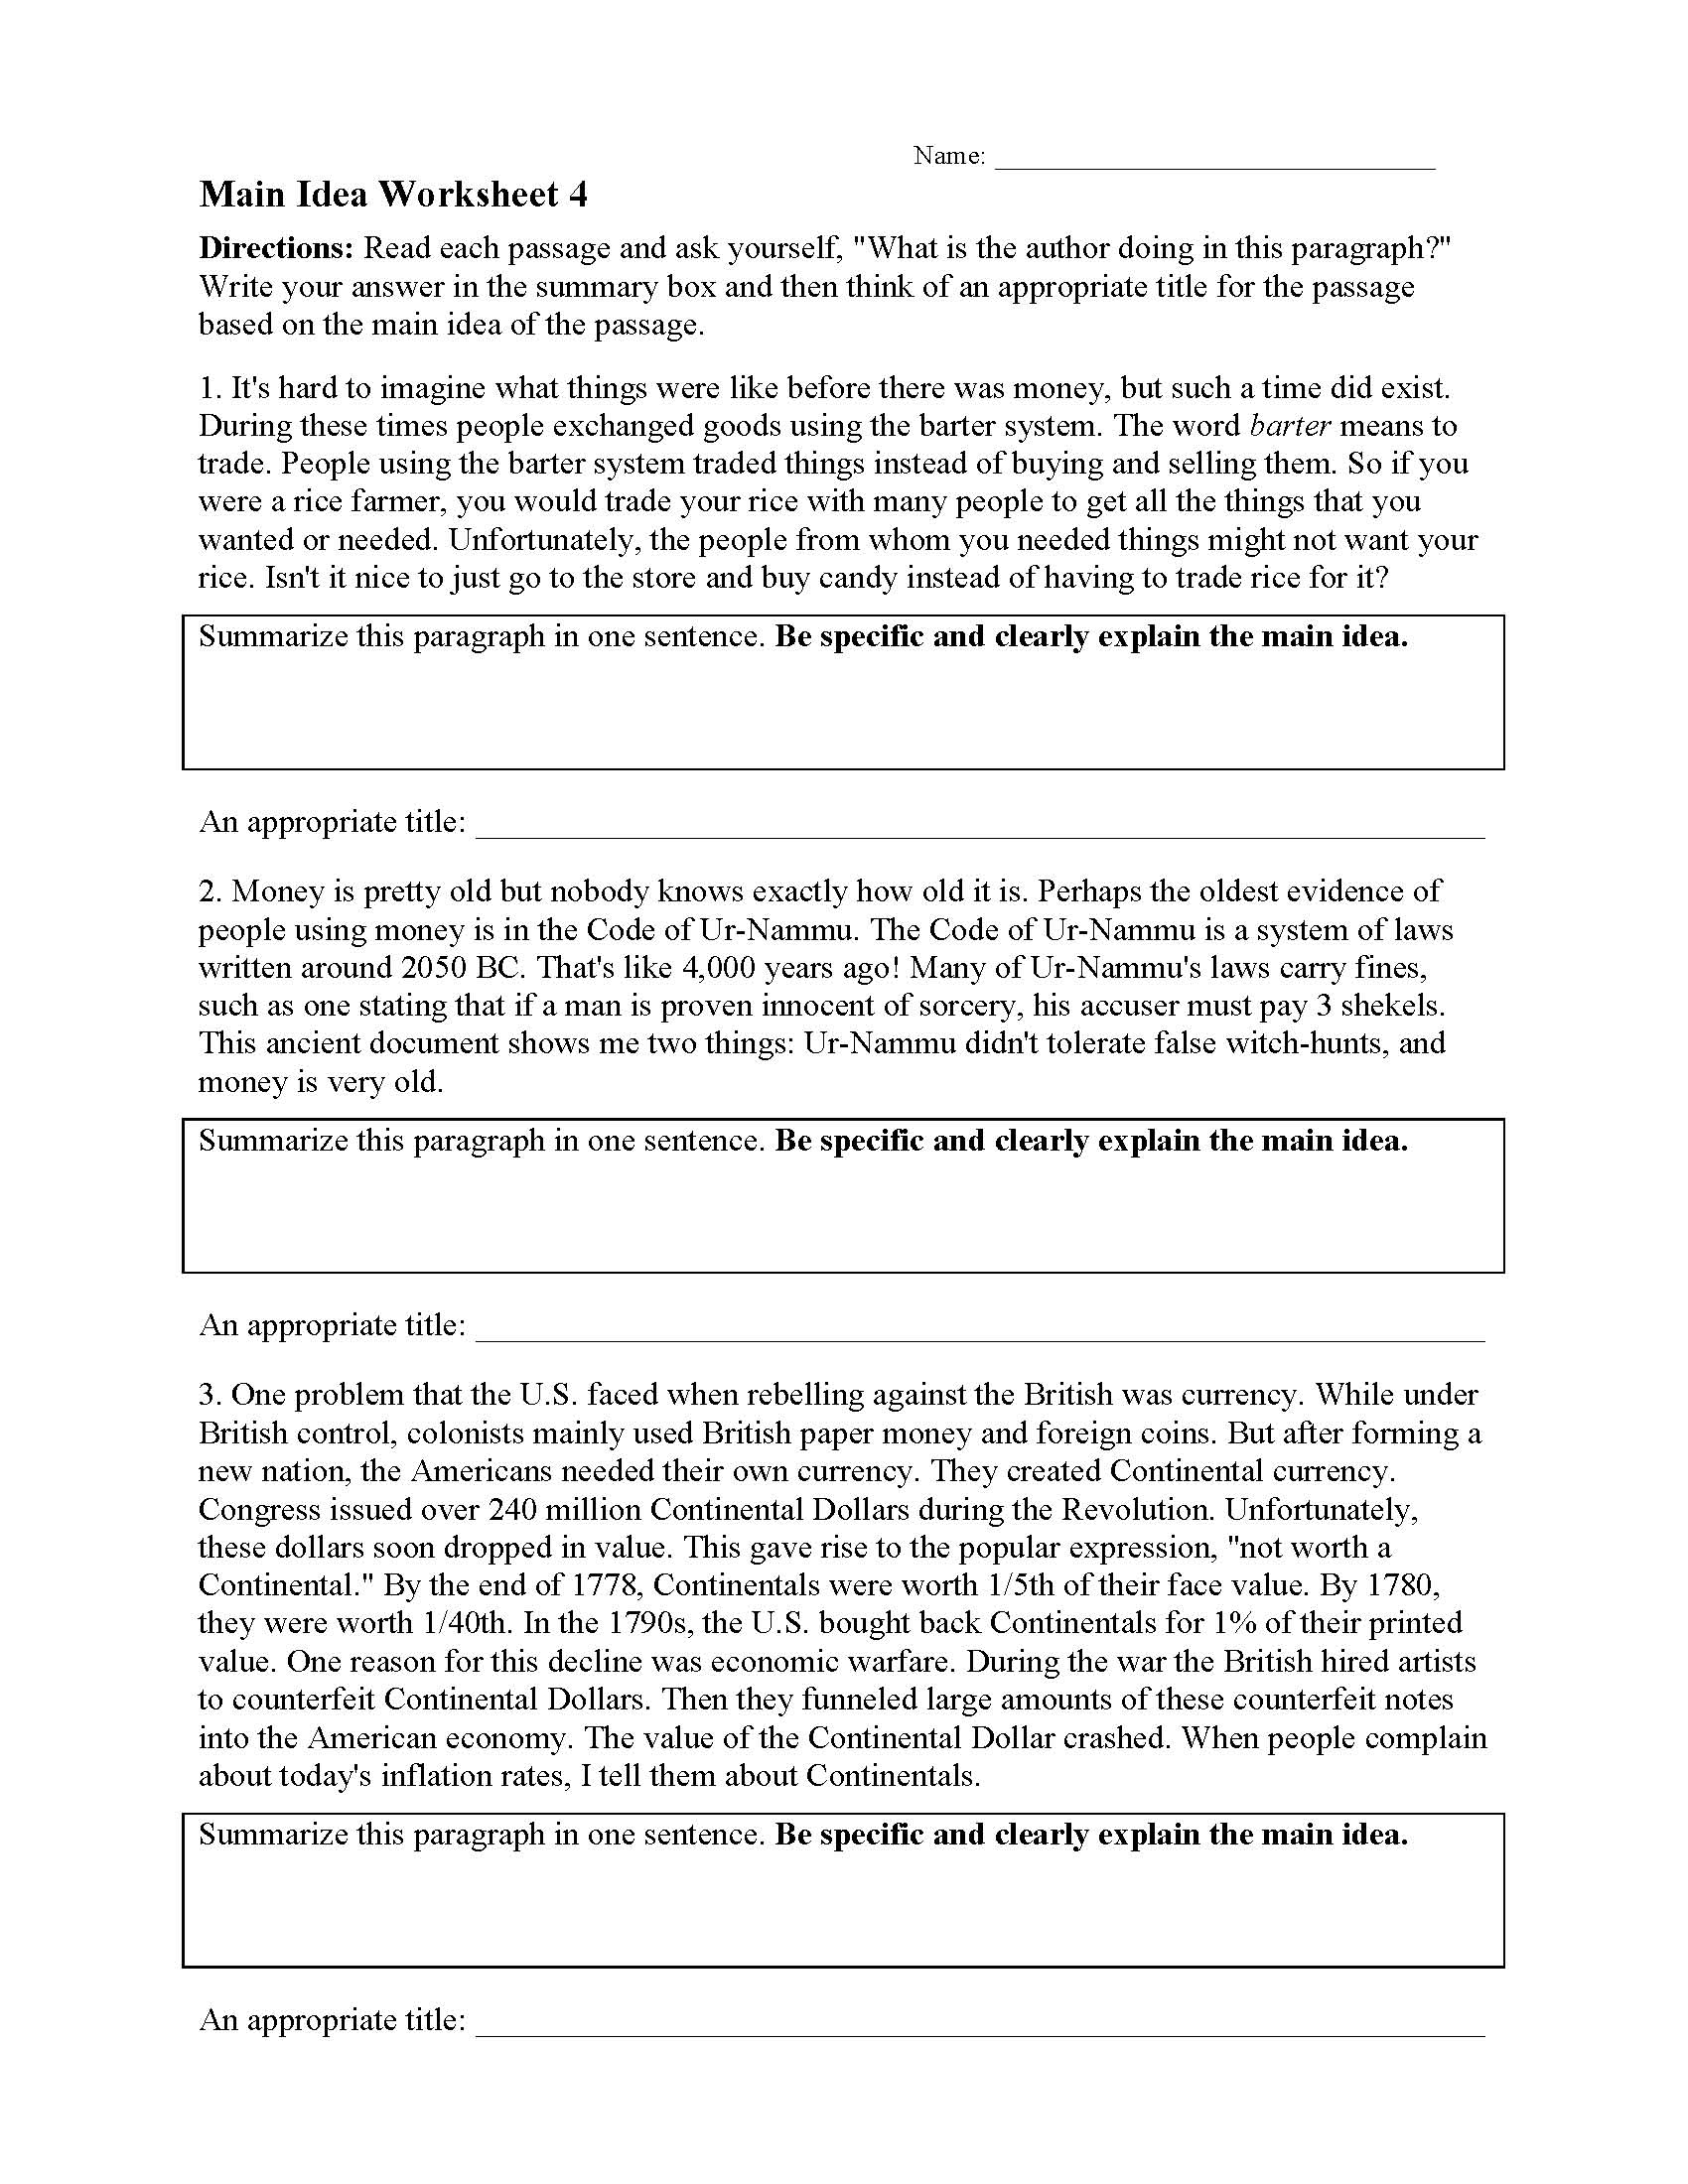 Main Idea Worksheet 22  Reading Activity Intended For Main Idea Worksheet 4